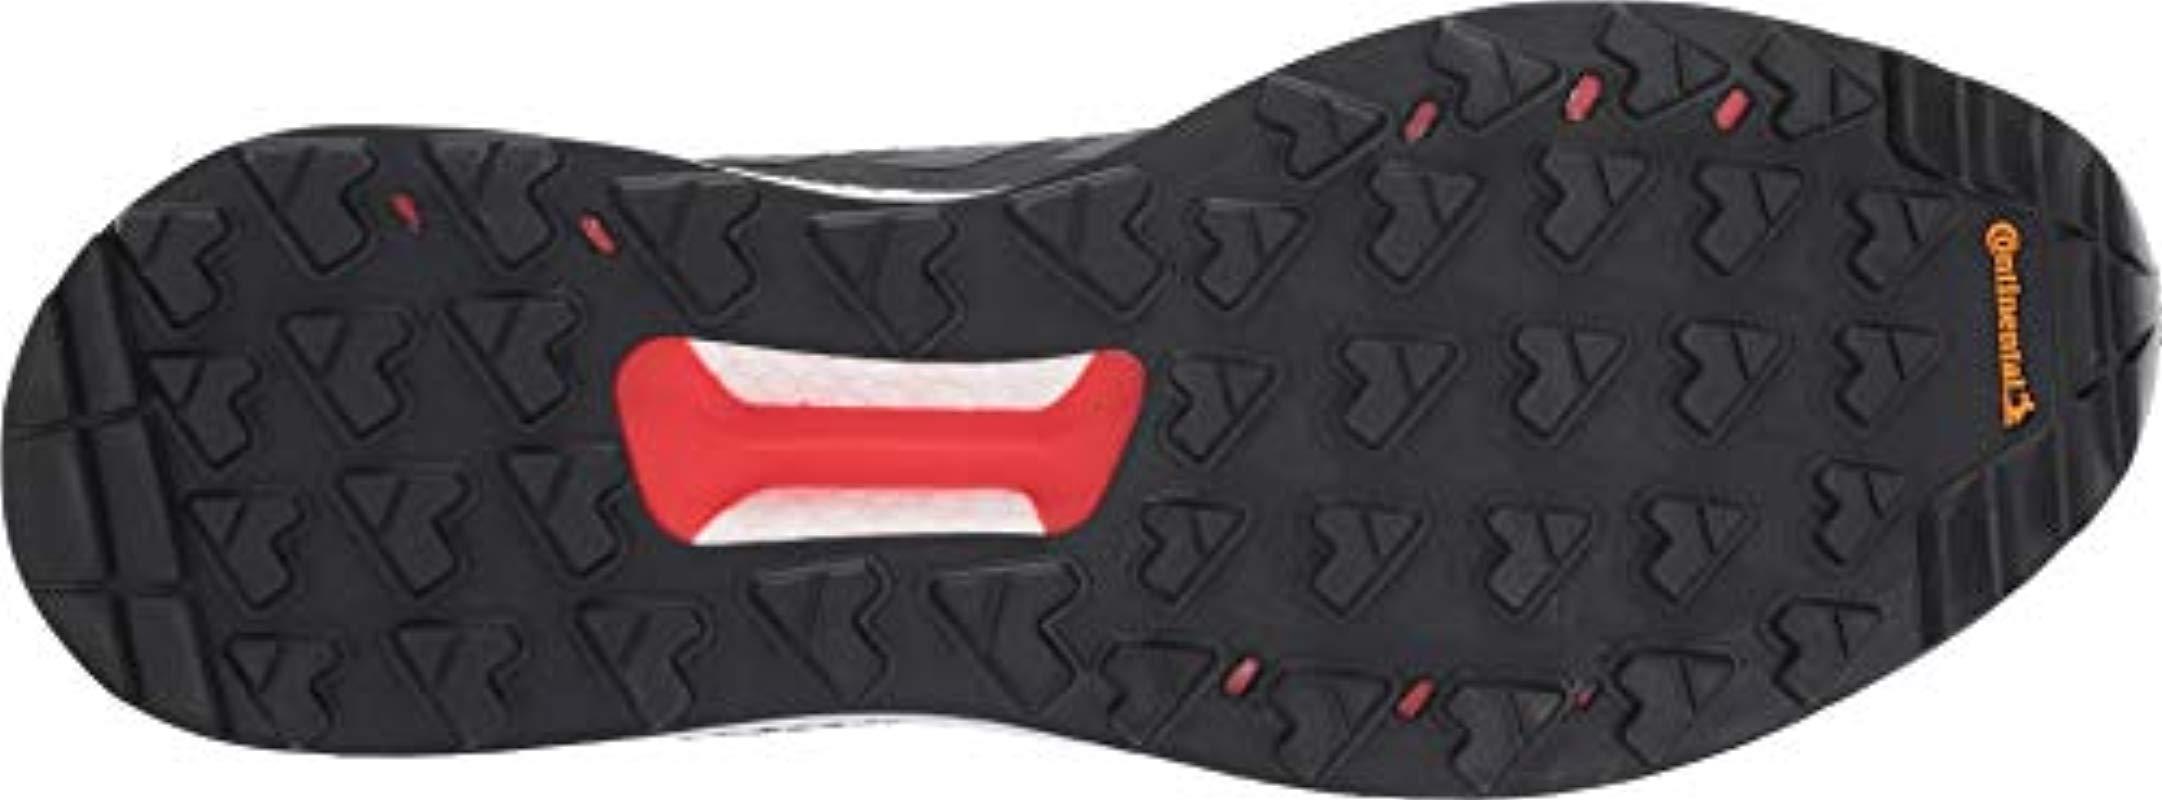 adidas Lace Terrex Free Hiker Hiking Boots in Black/Grey/Orange (Black) for  Men - Lyst